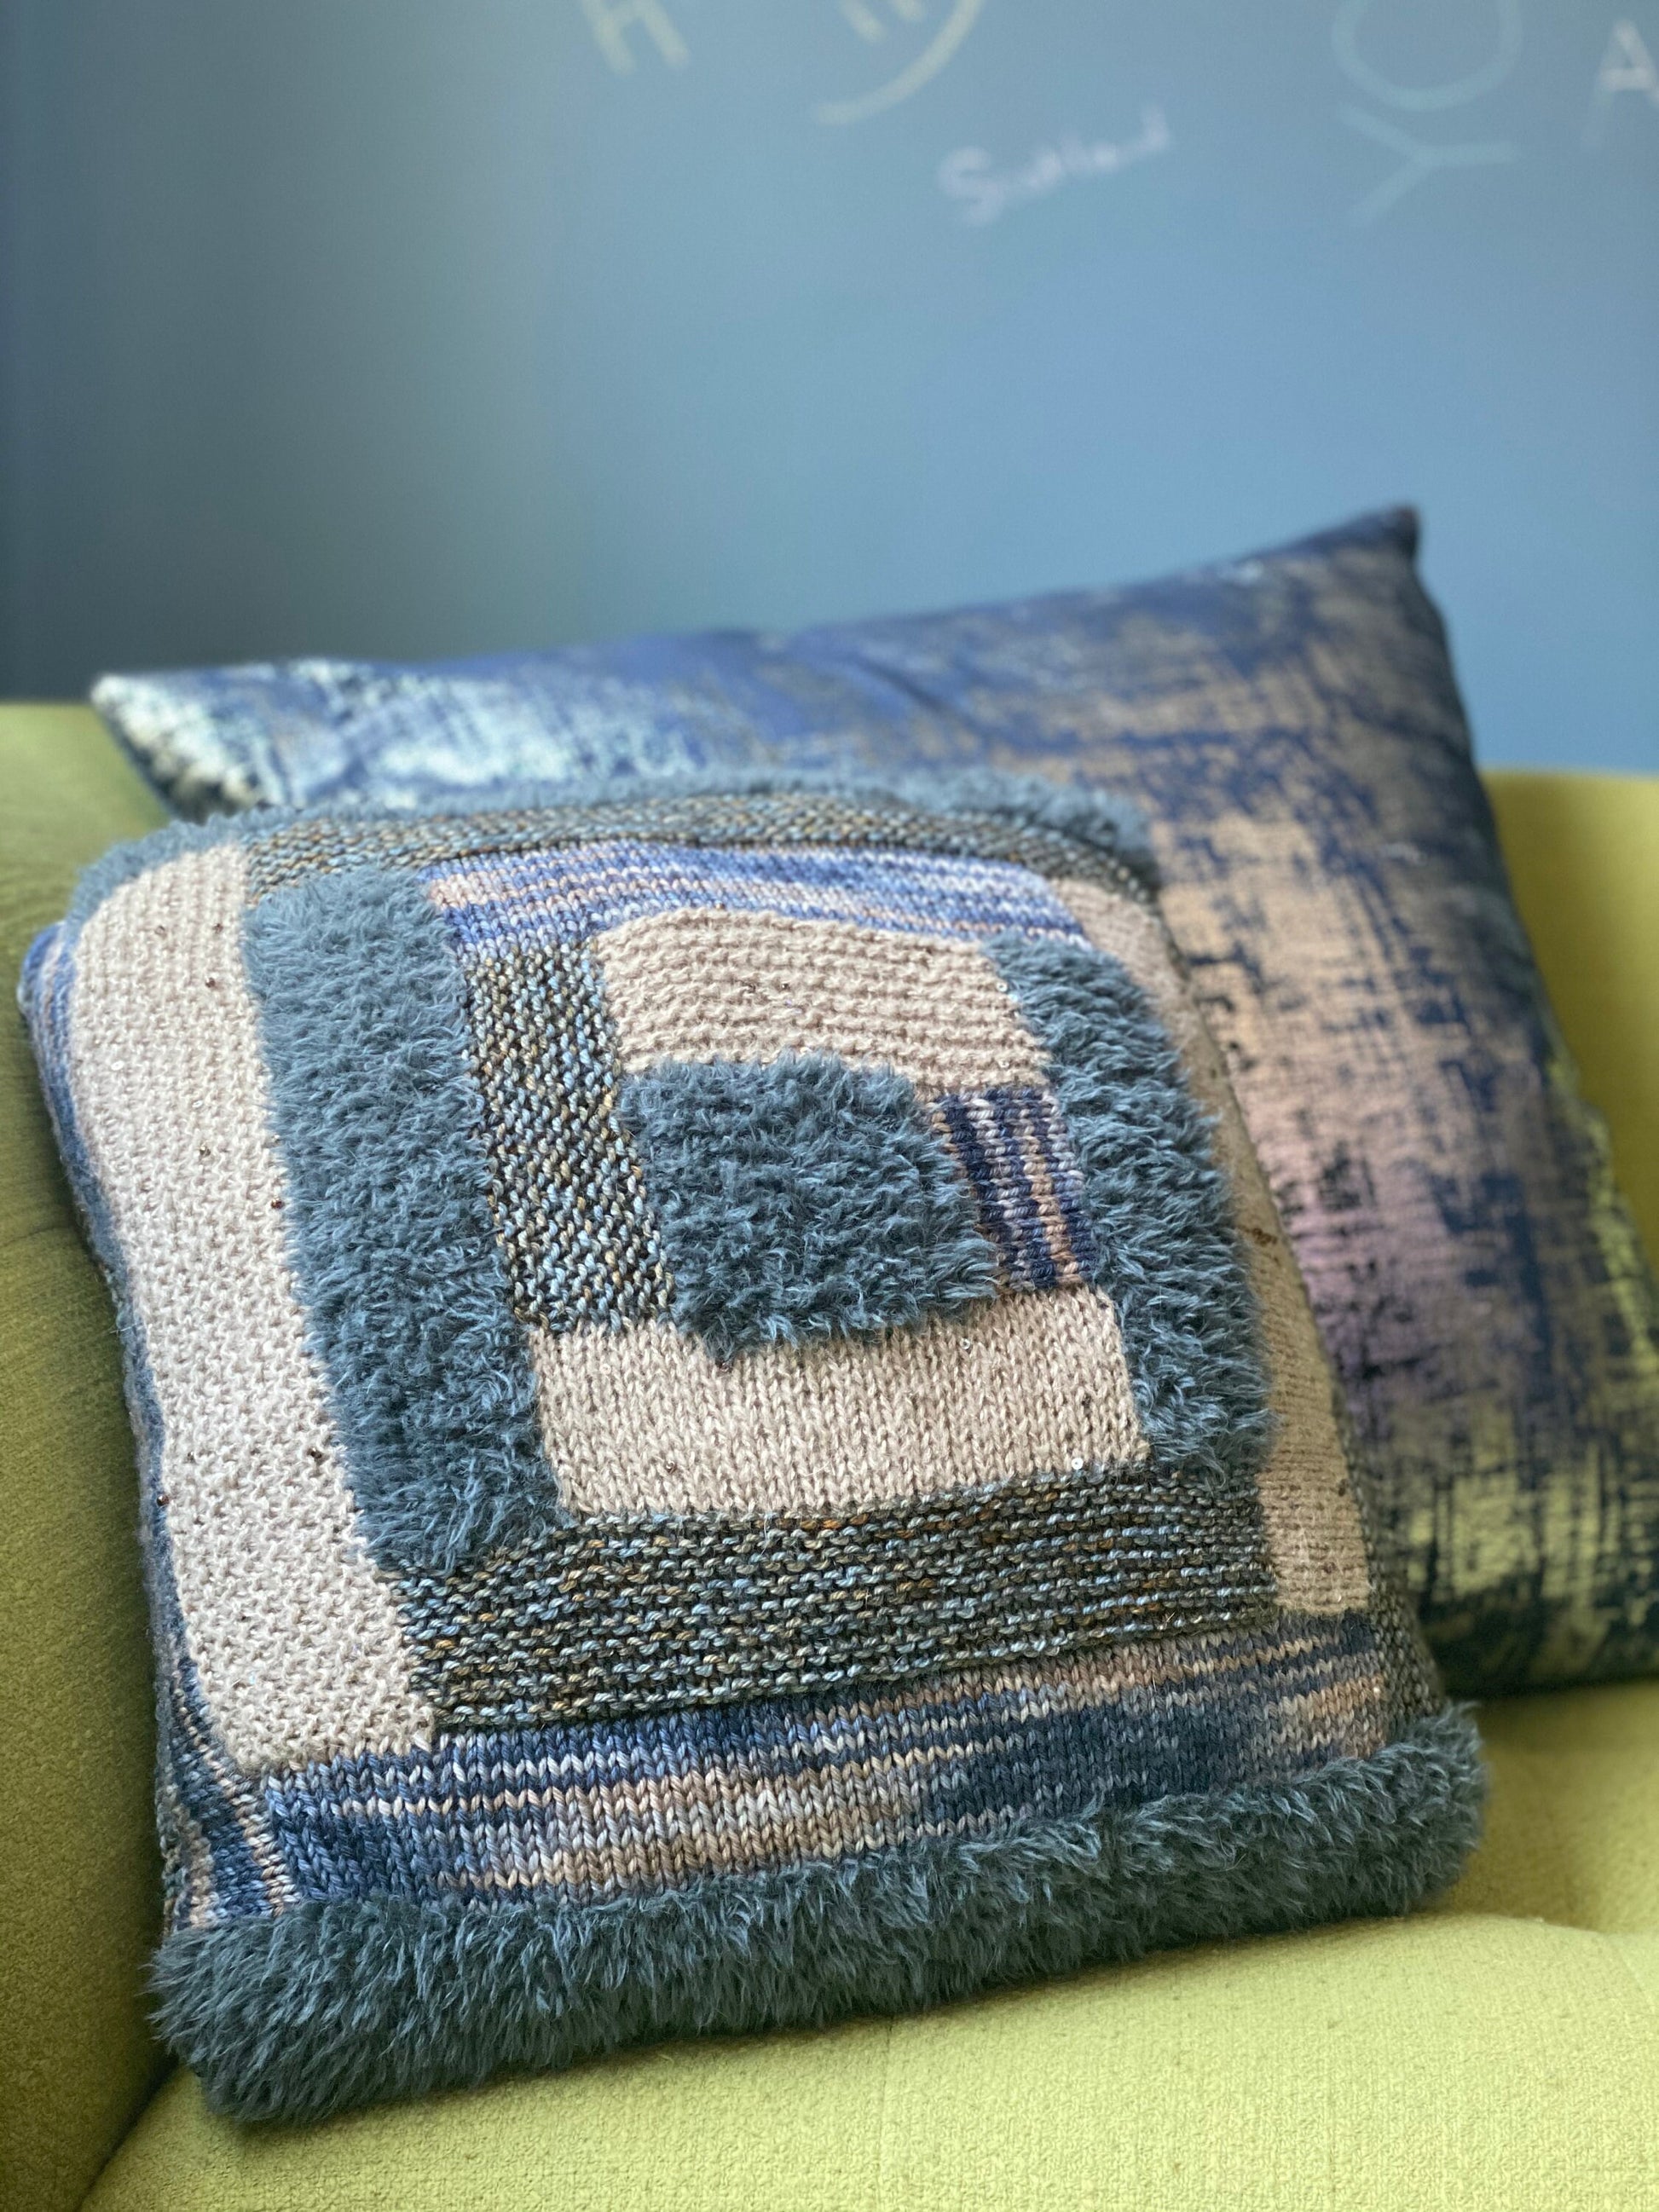 Piece and Press: Denim patchwork pillow